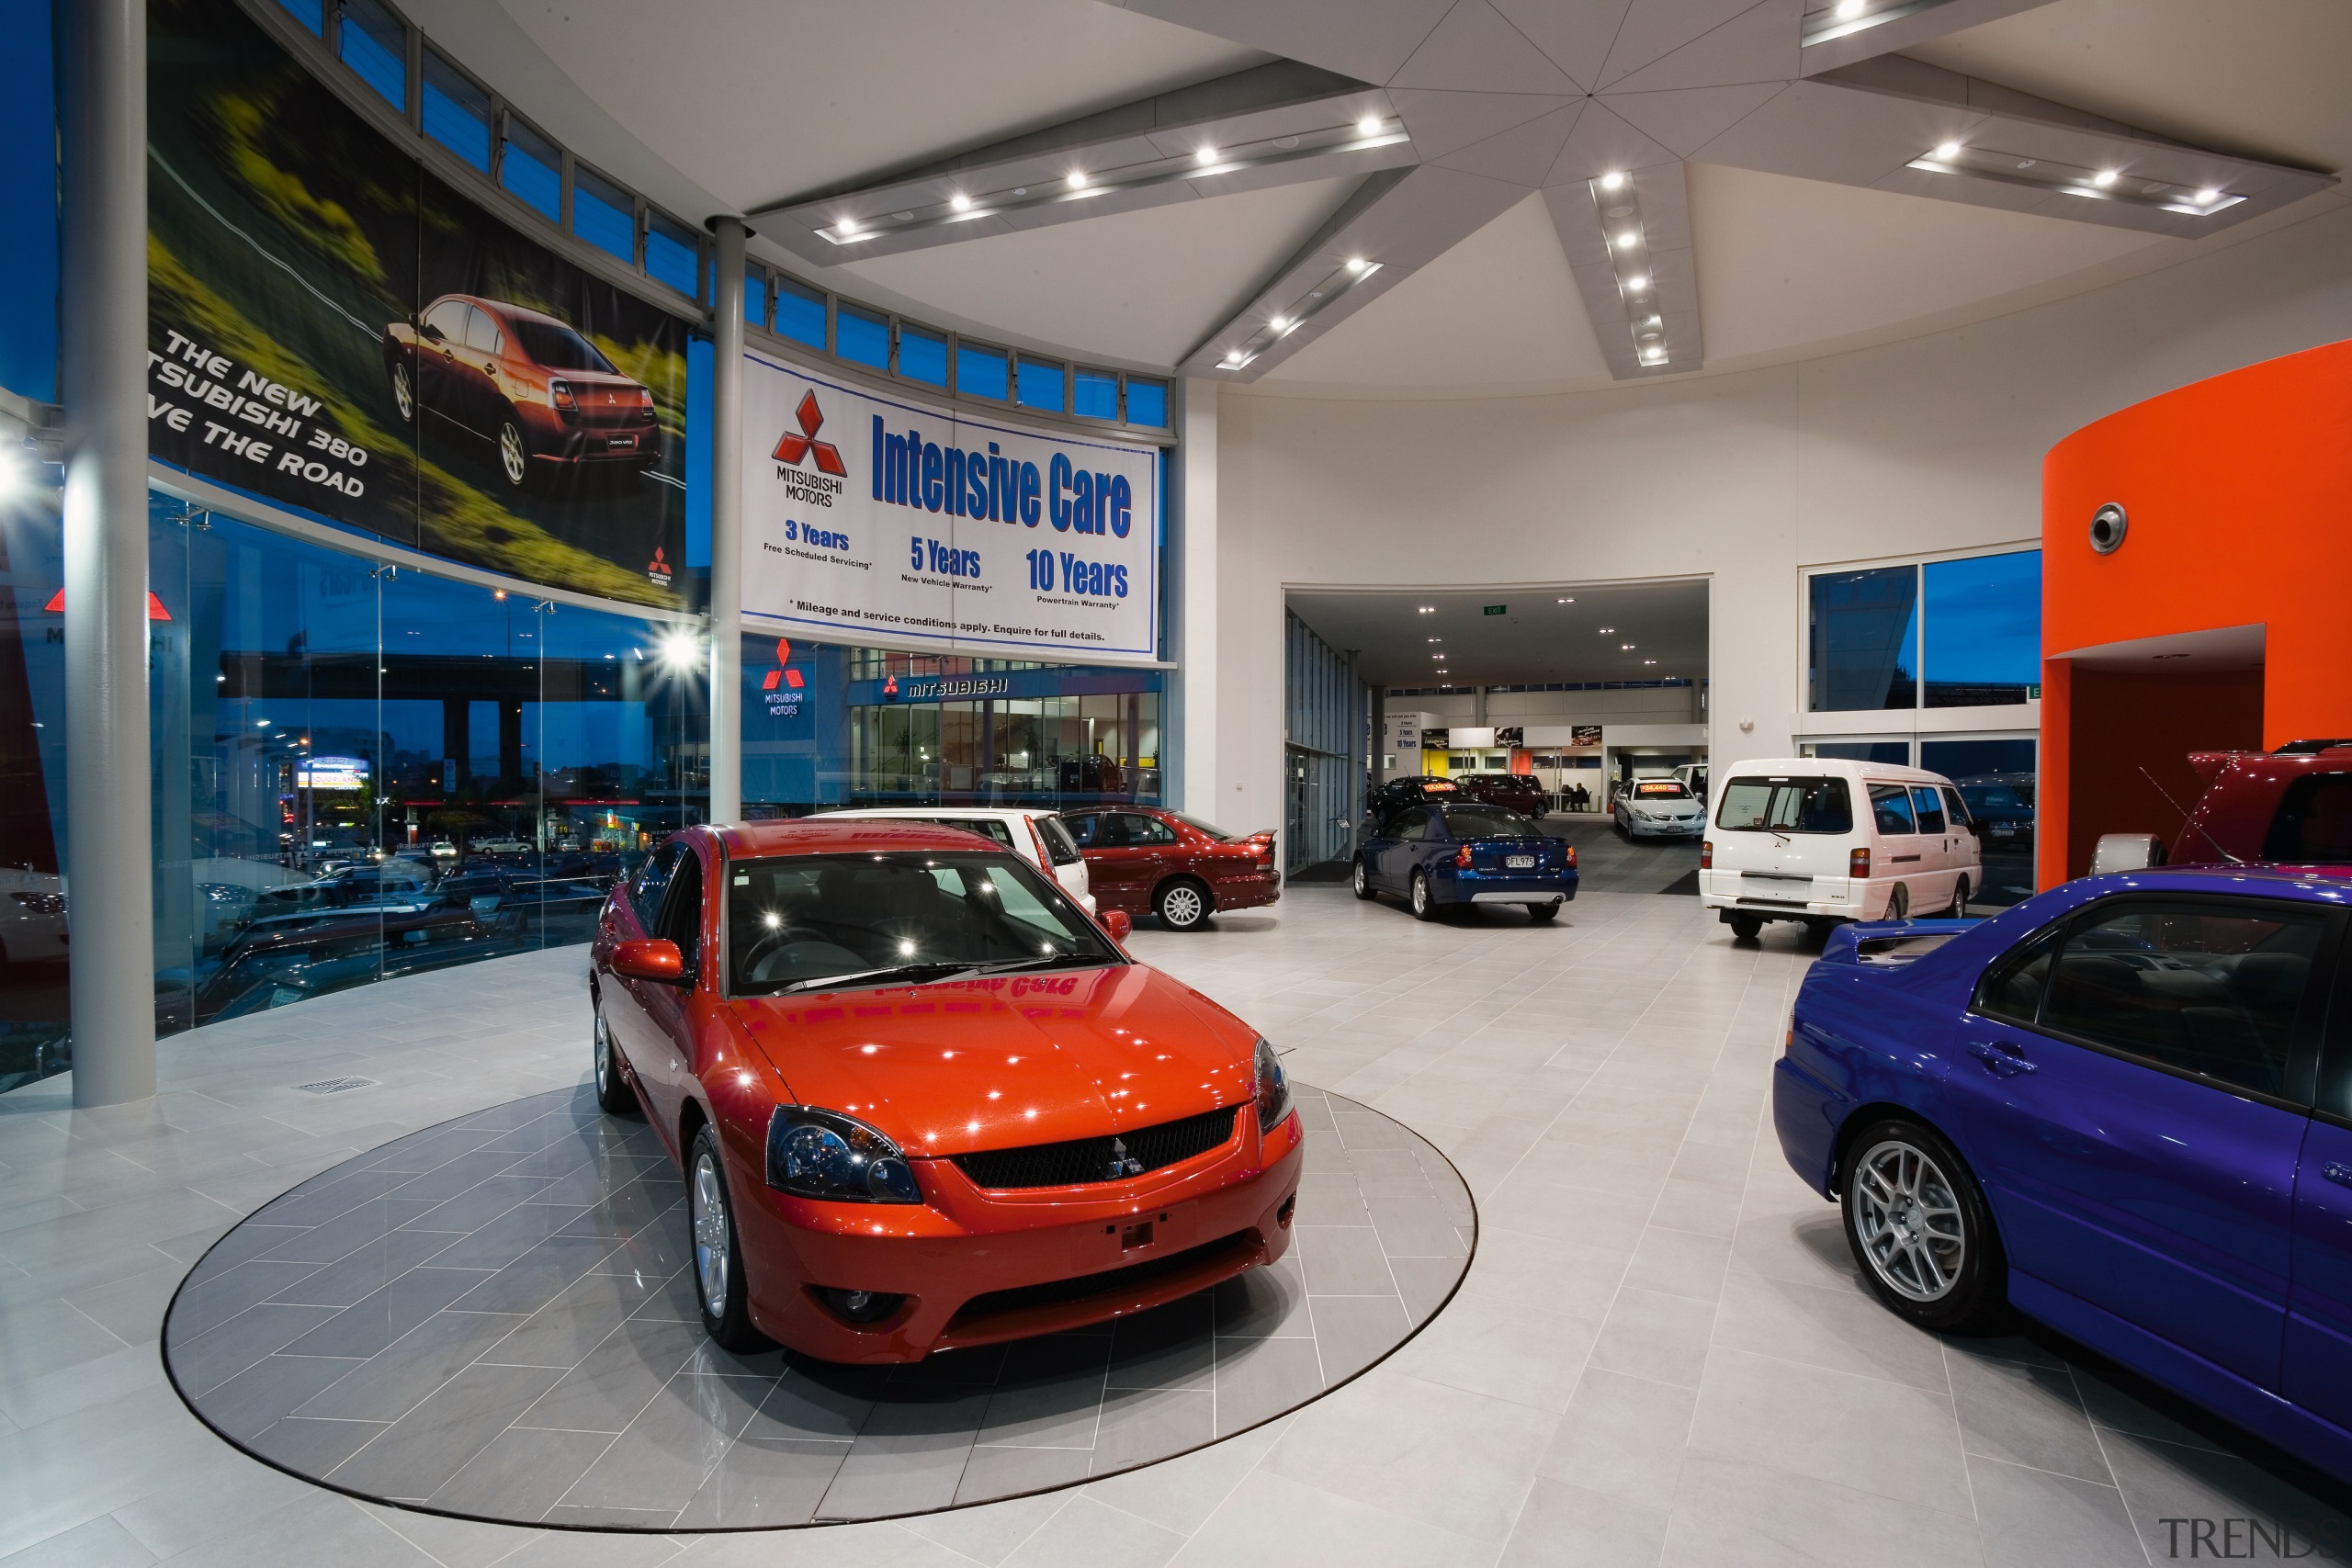 A view of the Mitsubishi Motors building. - auto show, automobile repair shop, automotive design, car, car dealership, exhibition, mid size car, motor vehicle, vehicle, gray